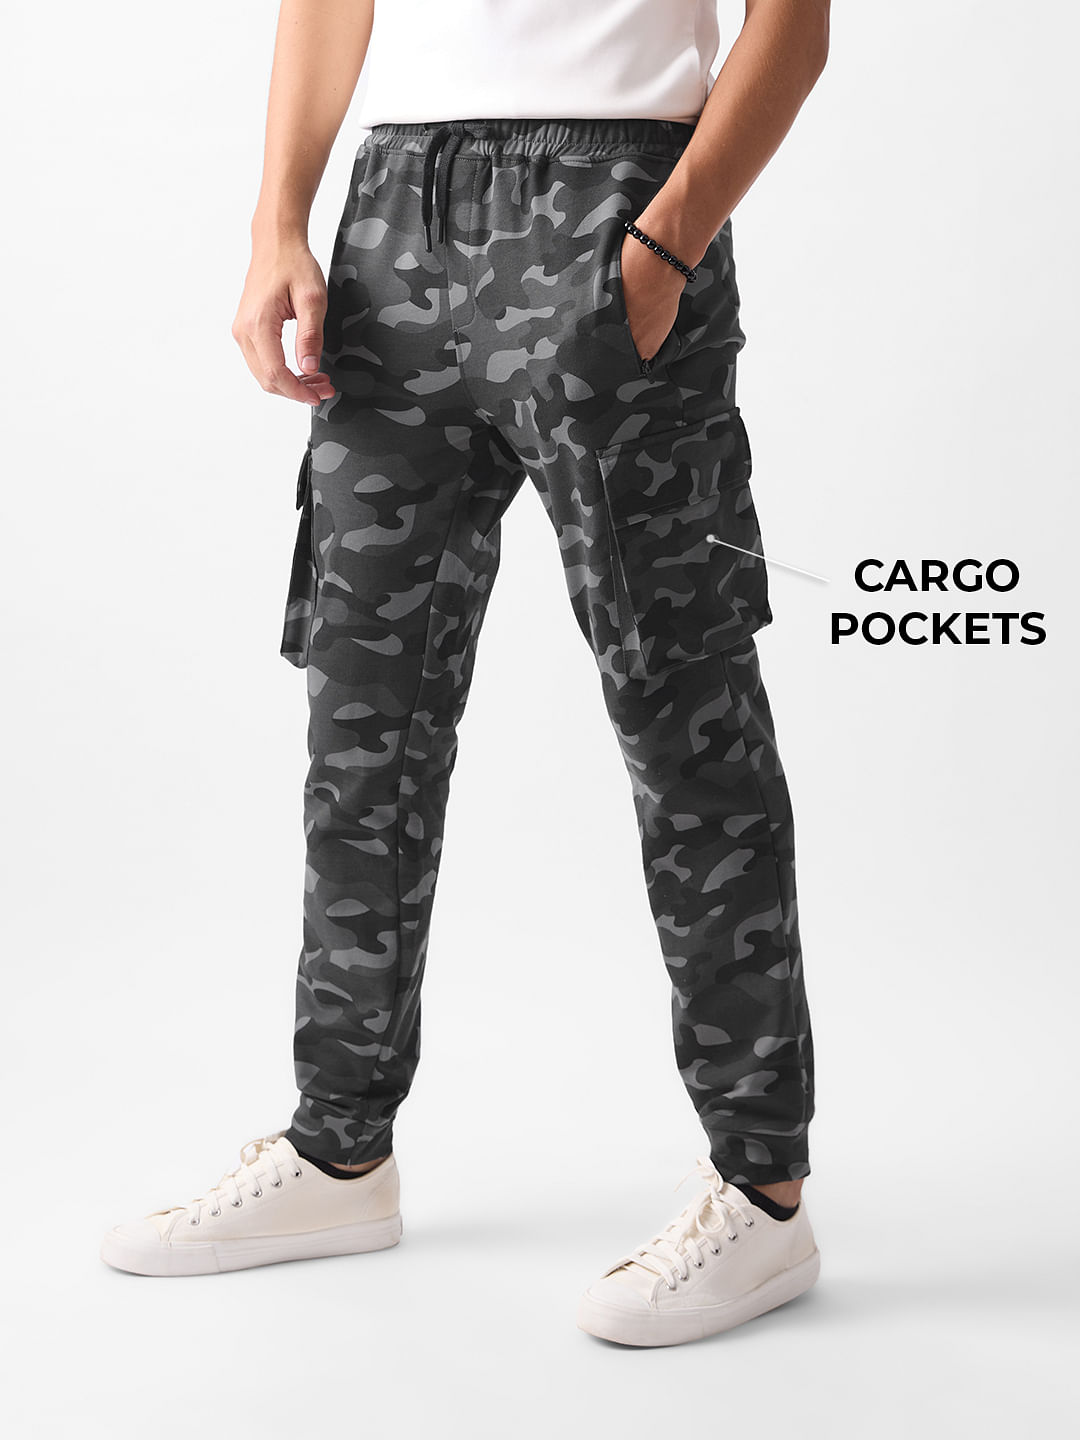 Buy Solids: Dark Camo Cargo Joggers Online